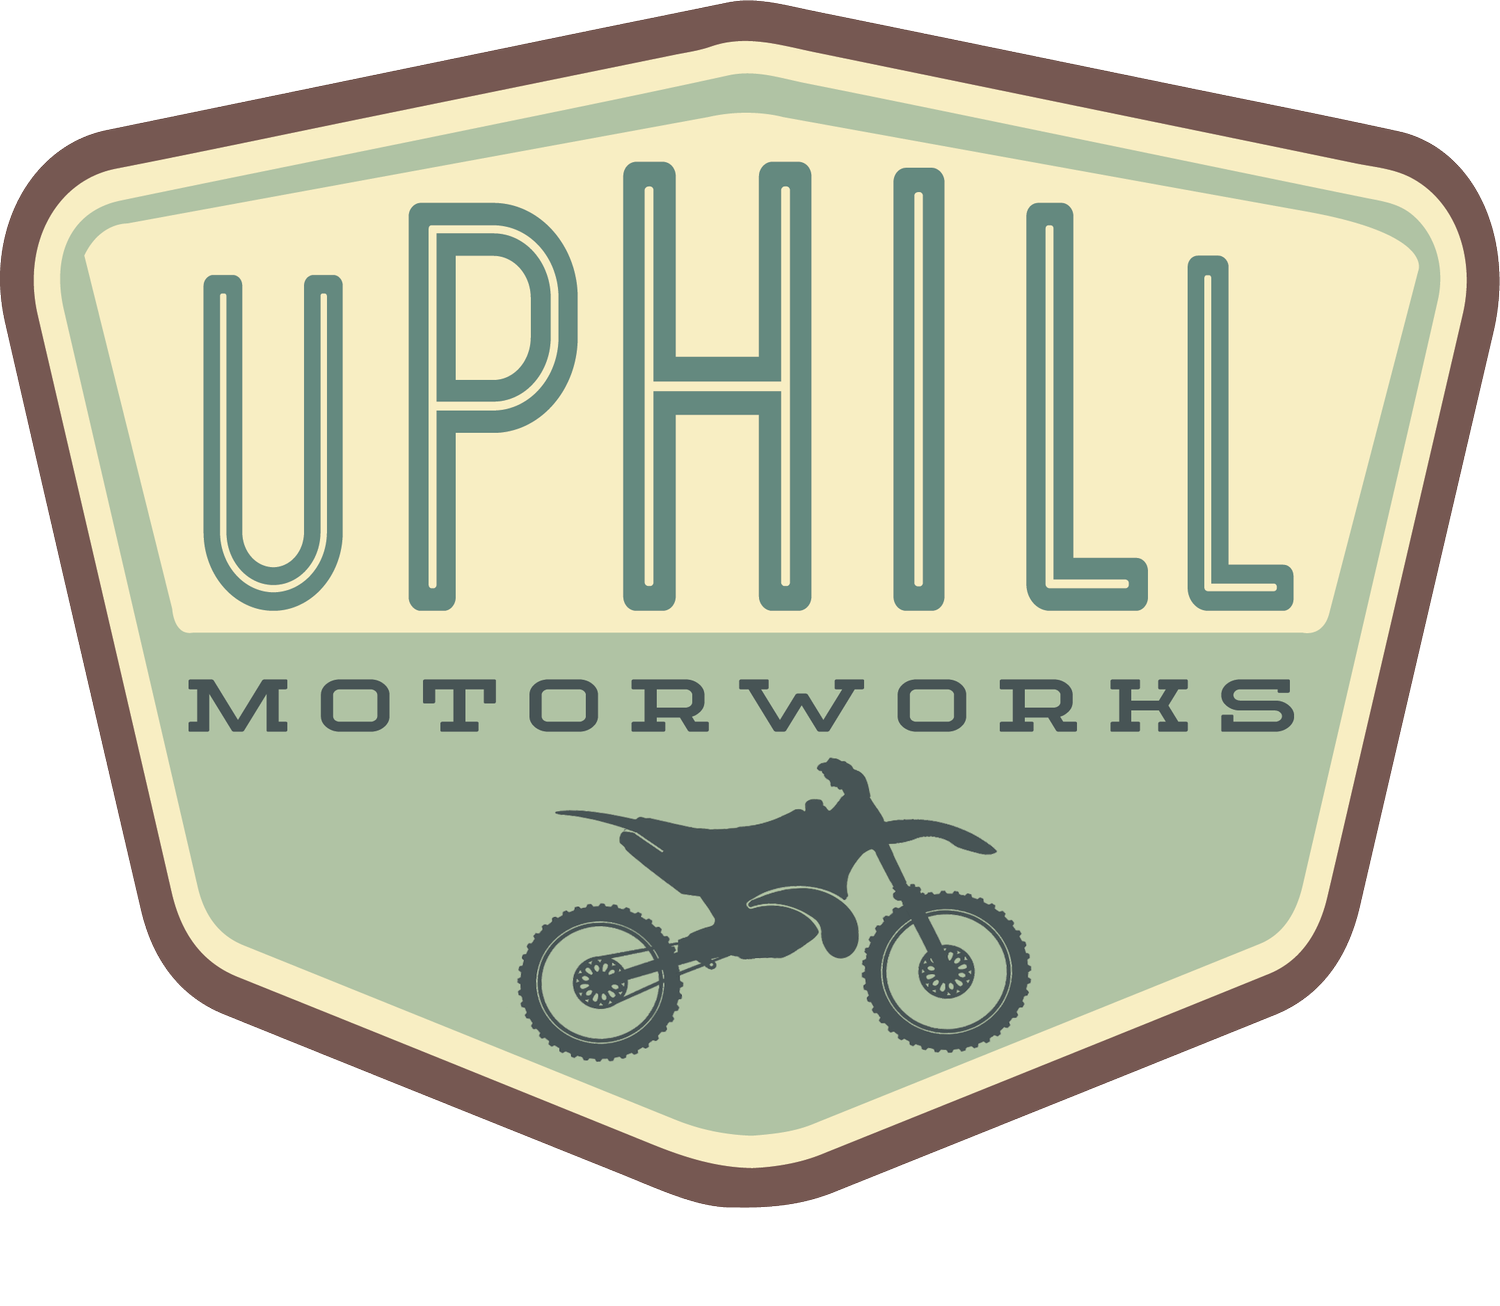 Uphill Motorworks